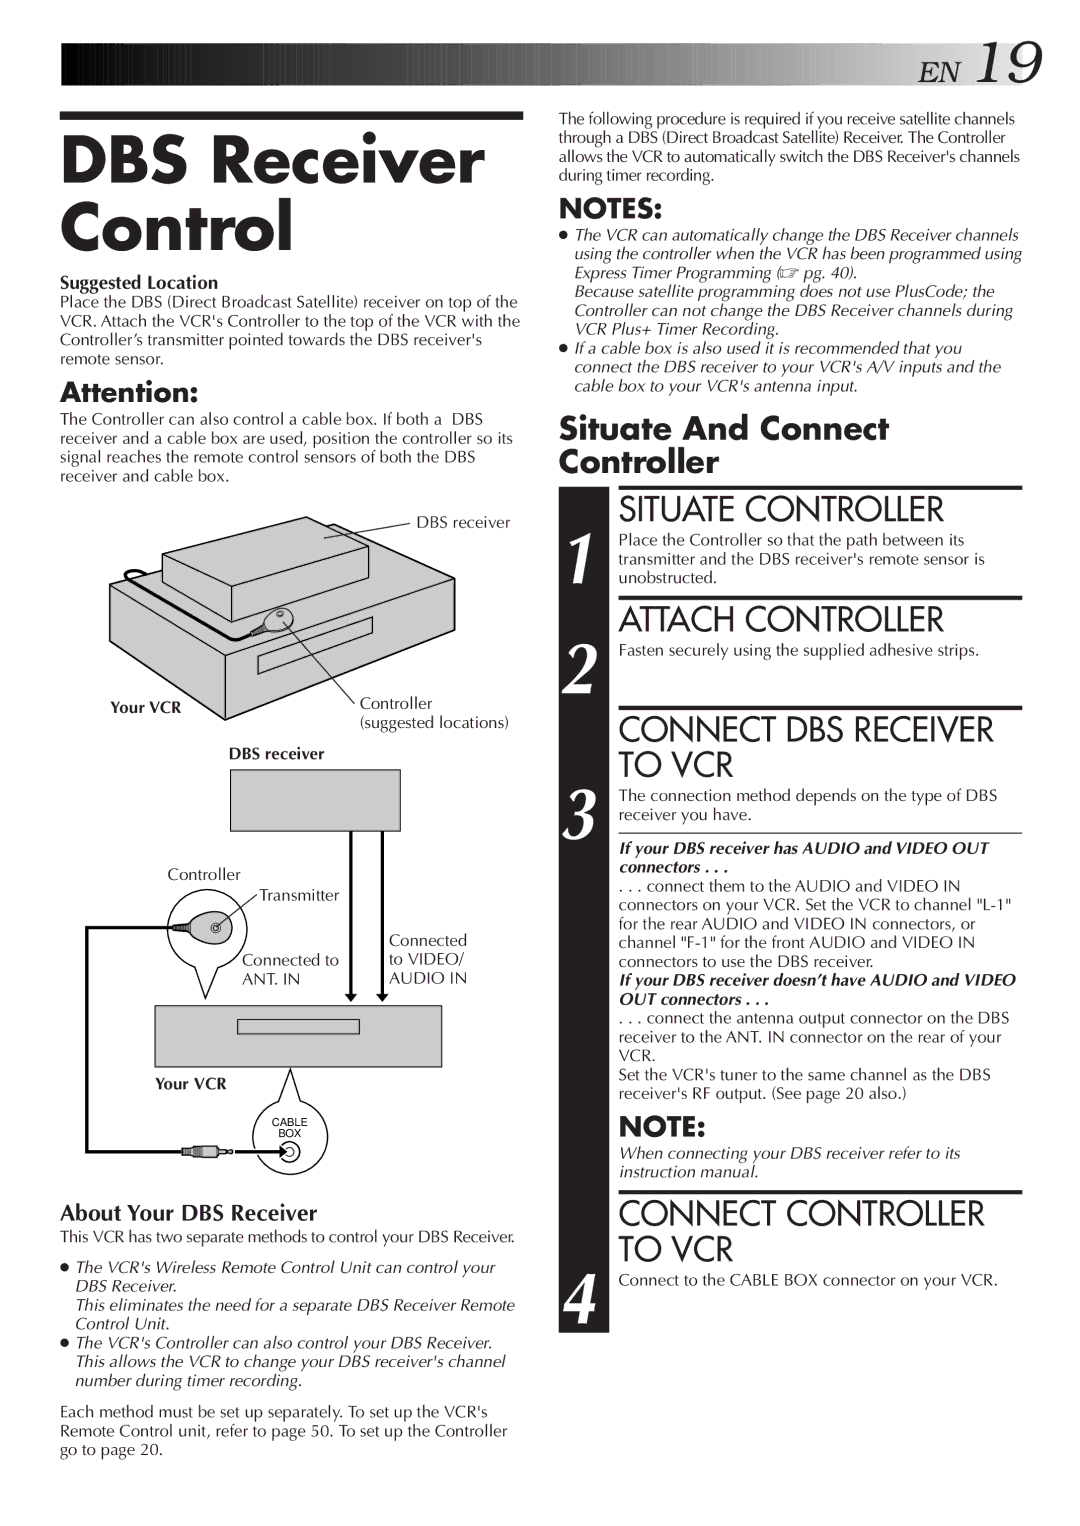 JVC HR-VP656U manual DBS Receiver Control, Connect DBS Receiver To VCR, DBS receiver 